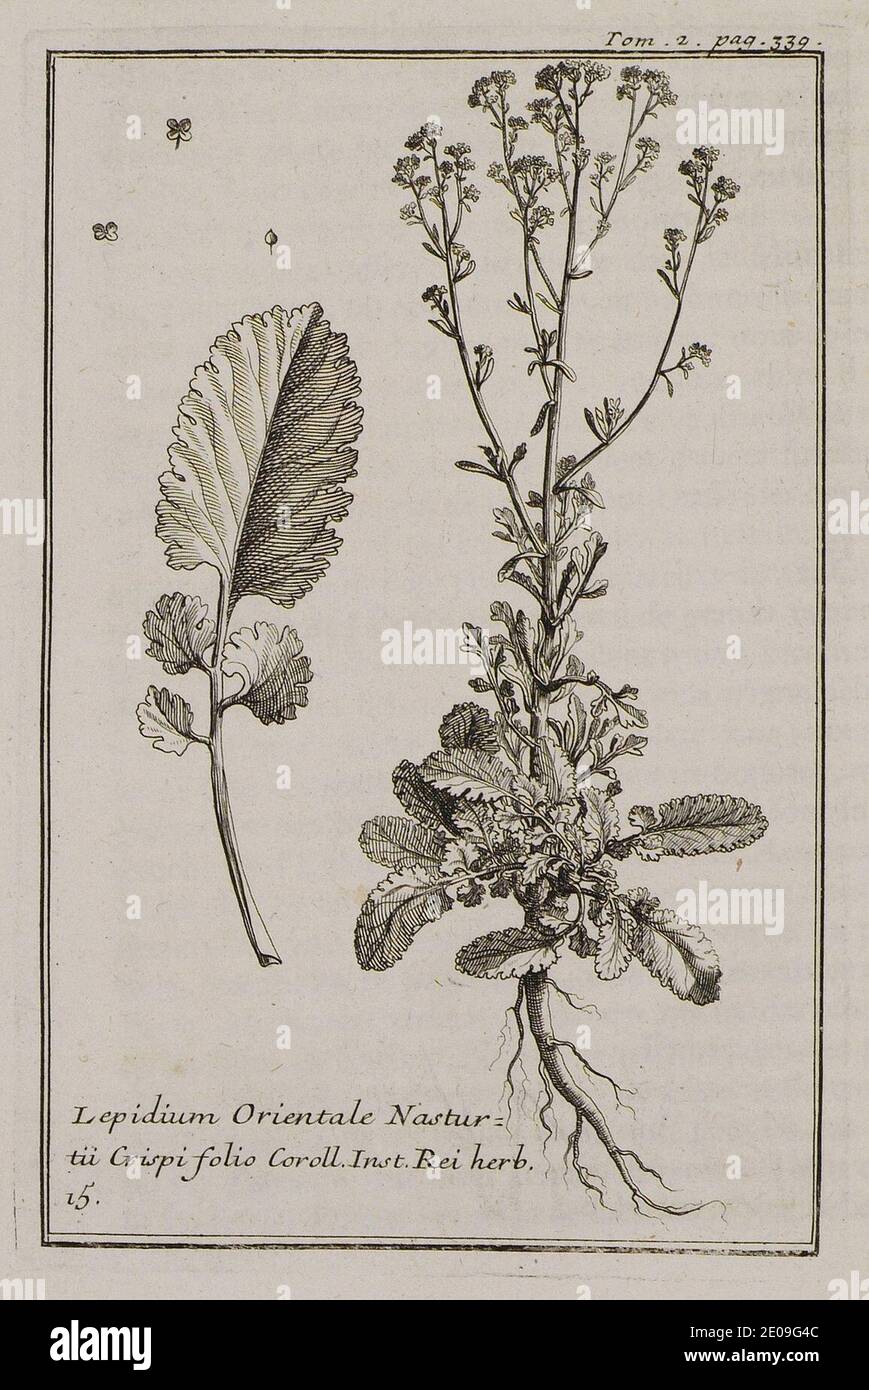 Lepidium Orientale Nasturtii Crispi folio Coroll Inst Rei herb 15 - Tournefort Joseph Pitton De - 1717. Stock Photo